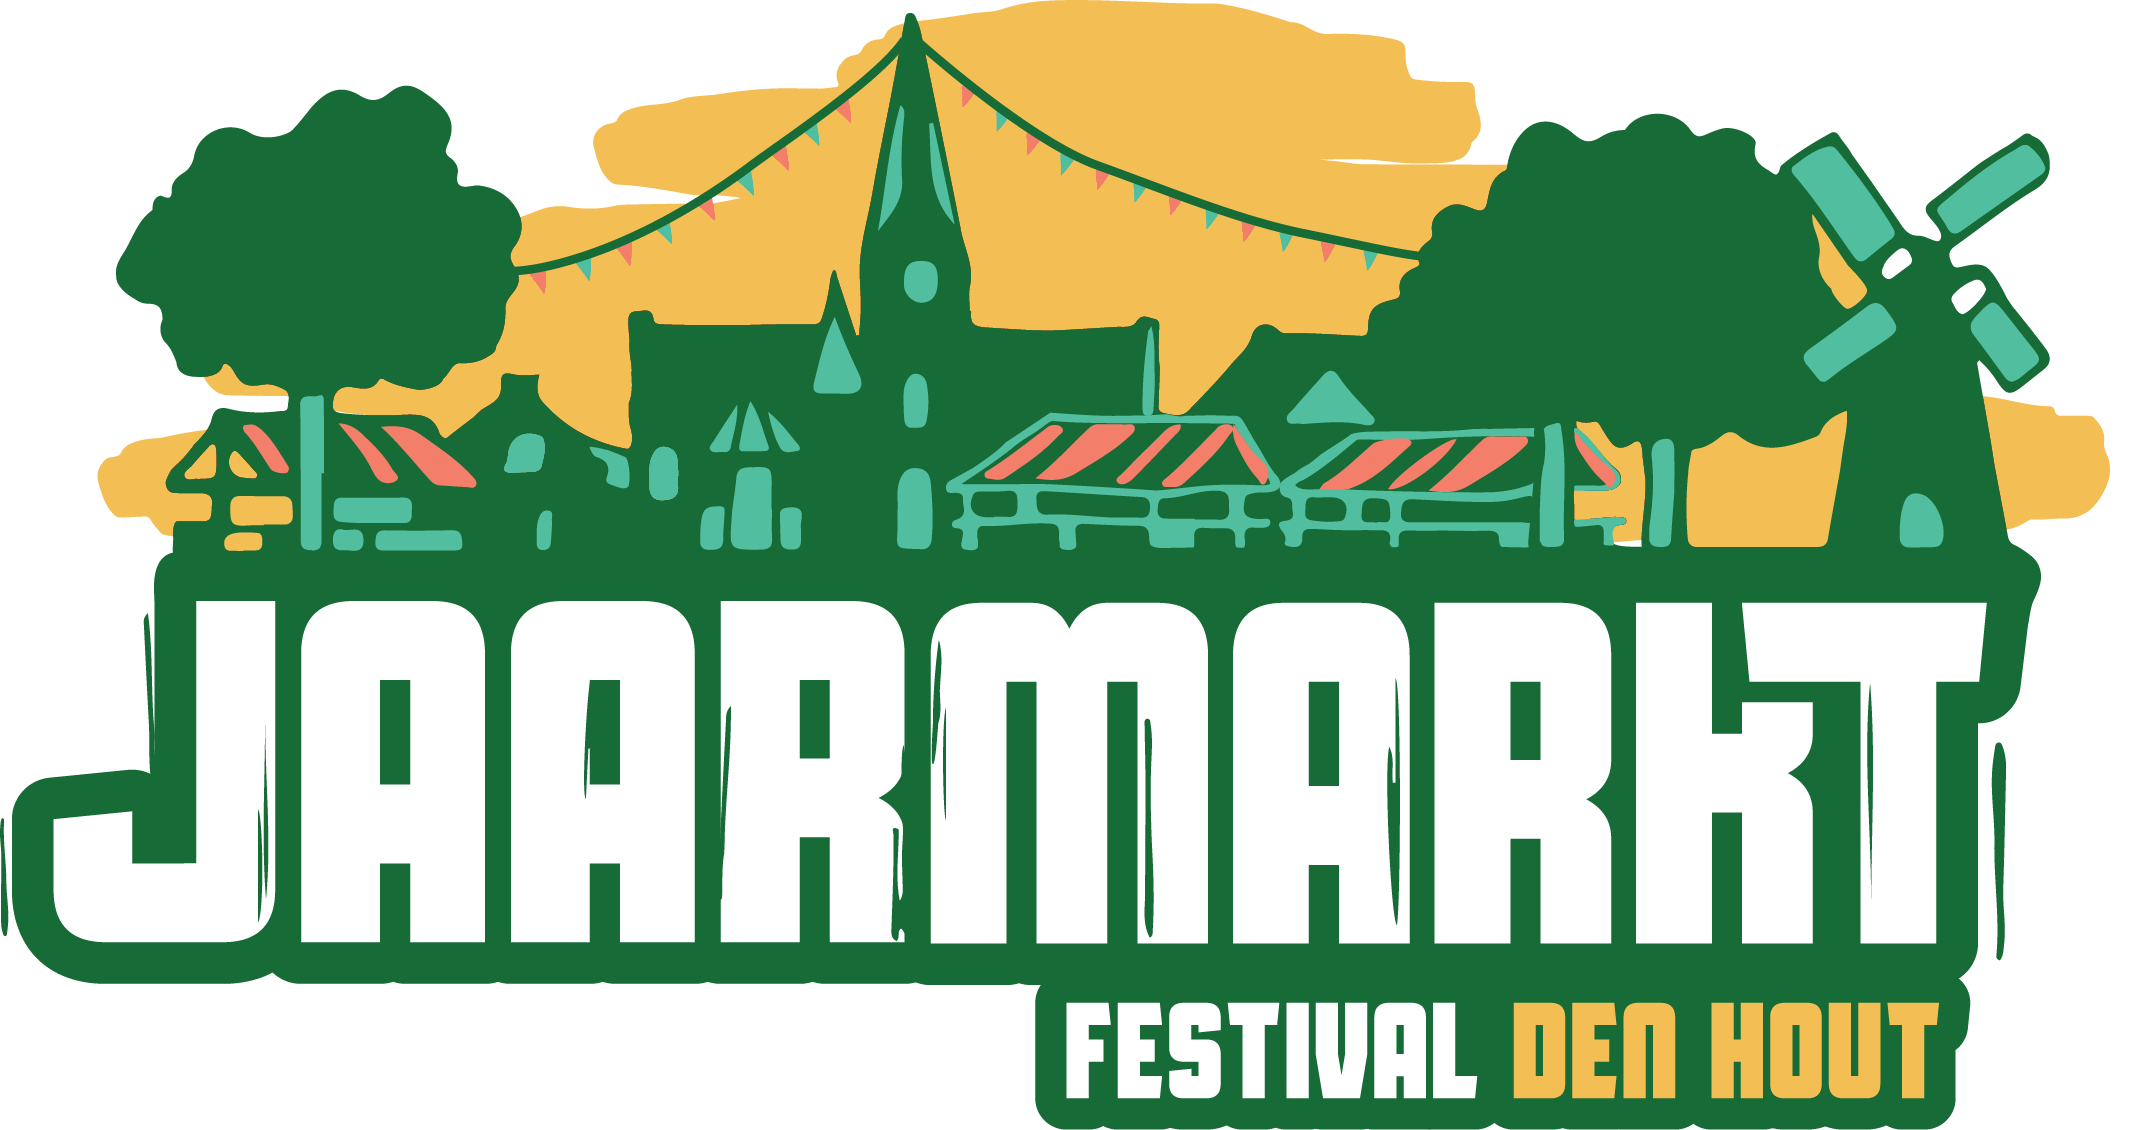 Jaarmarkt Festival Den Hout logo